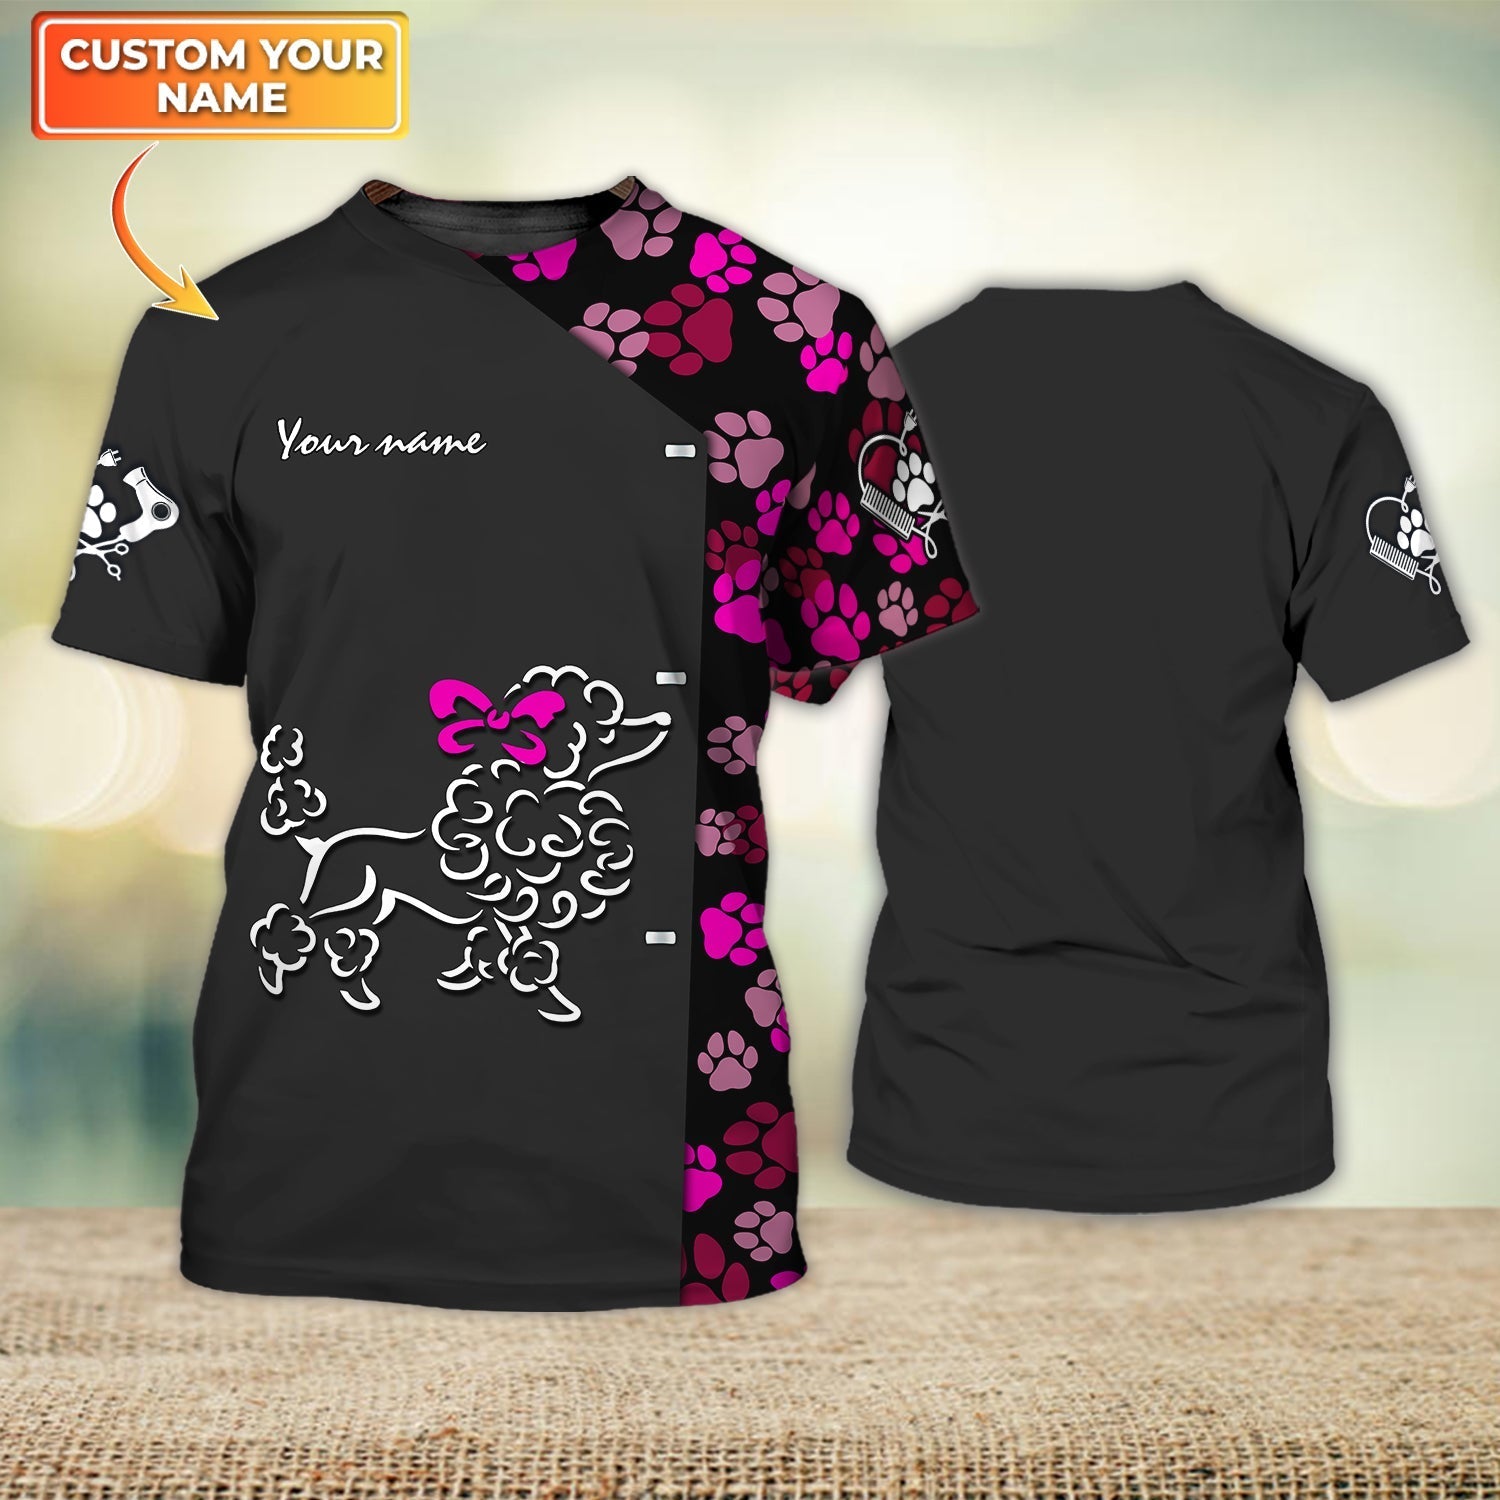 Coolspod Custom Groomer Shirt Pink Bow Poodle Dog Groomer Pet Groomer Uniform Salon Pet